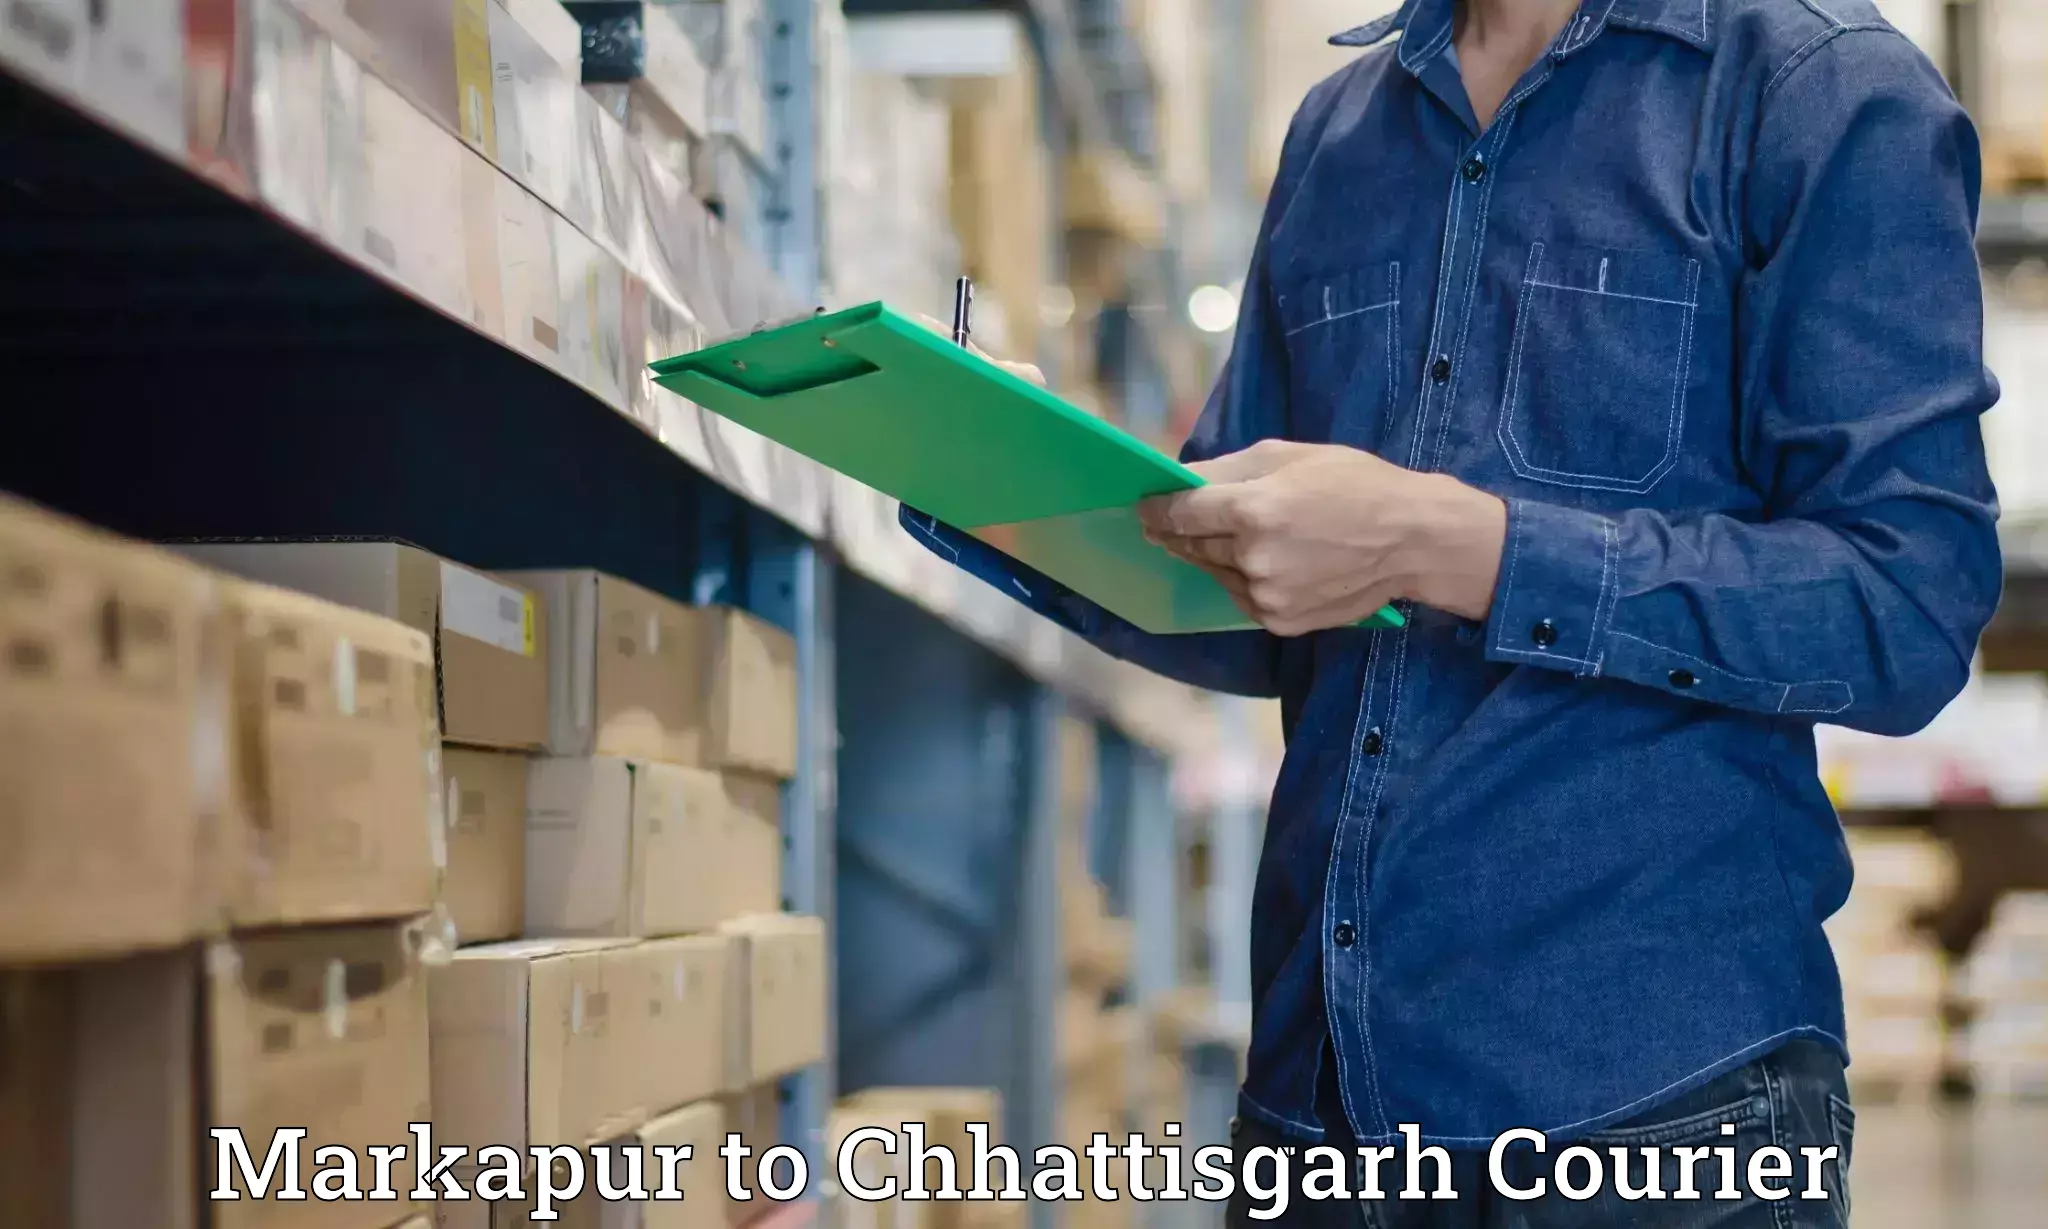 Courier service partnerships Markapur to Raigarh Chhattisgarh